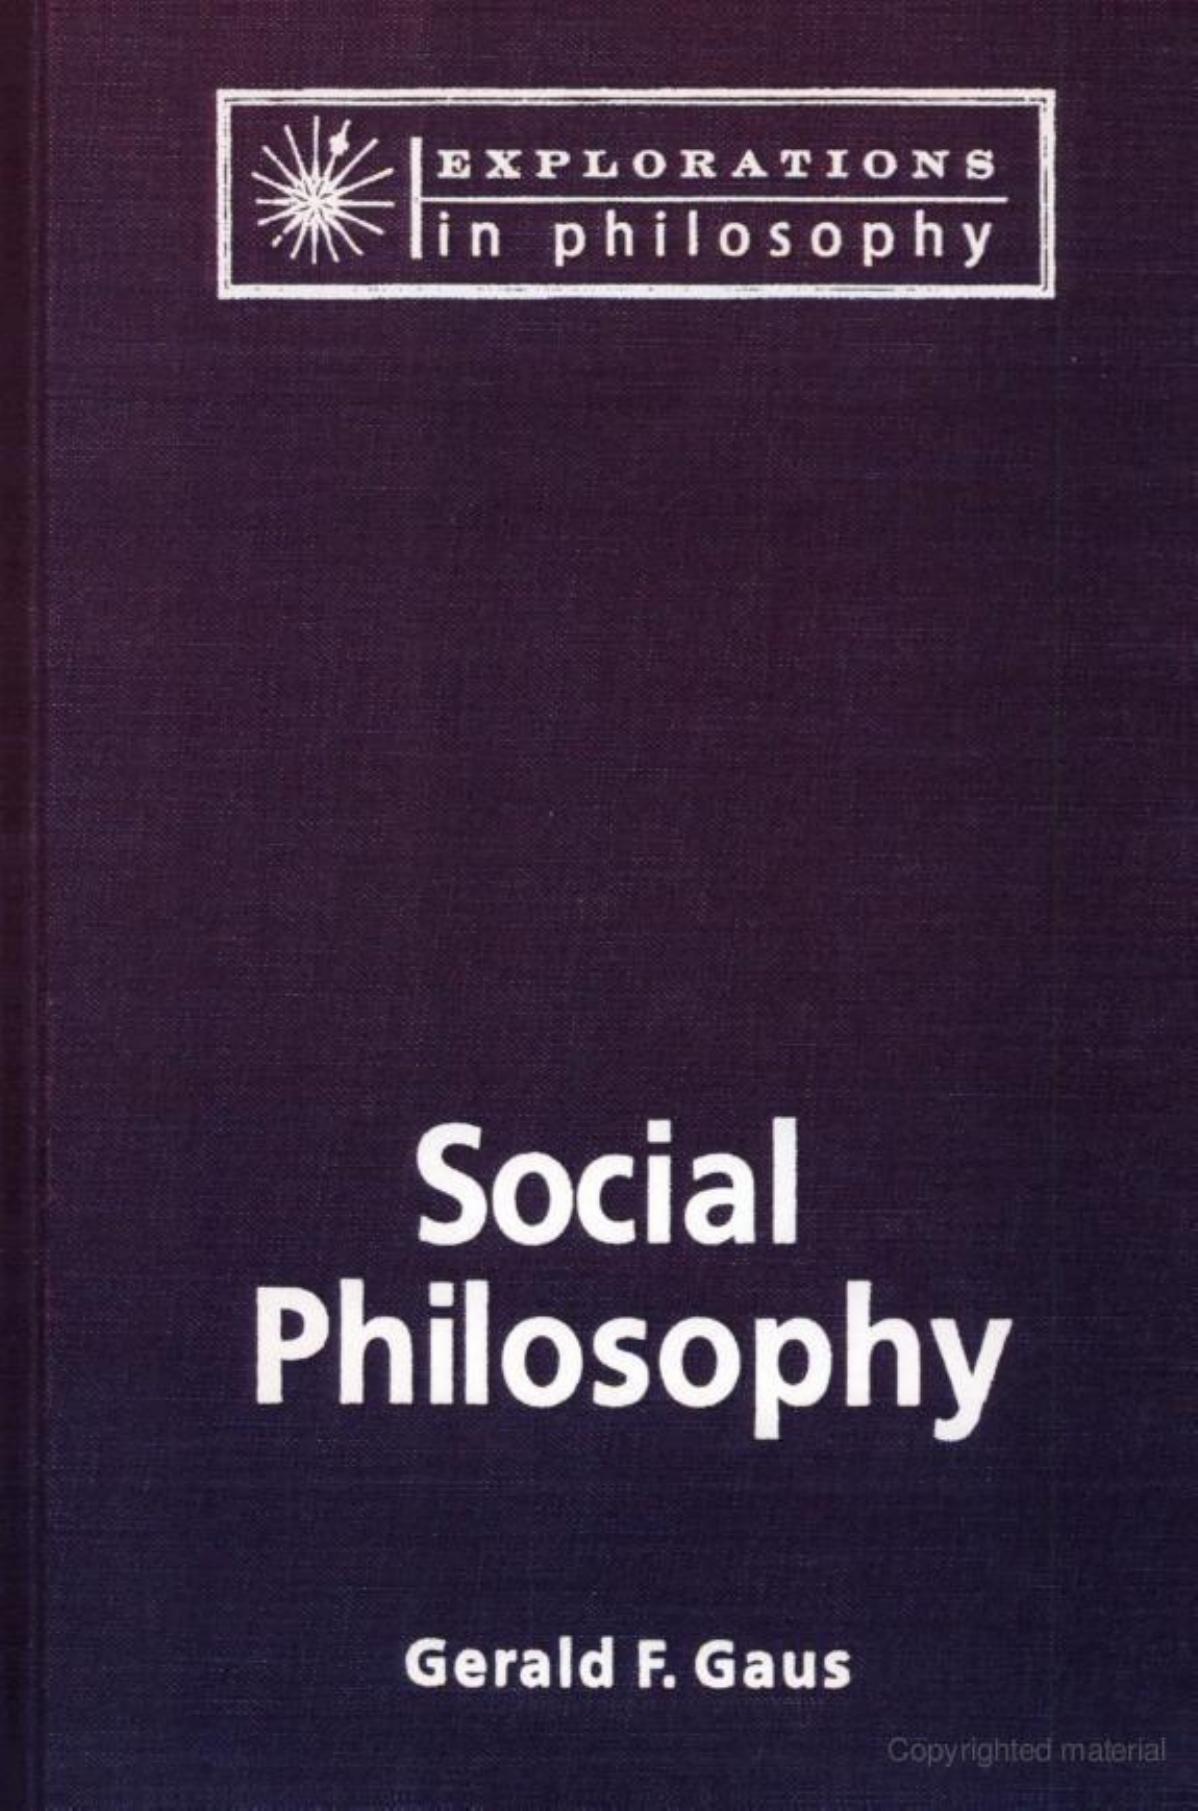 Social philosophy